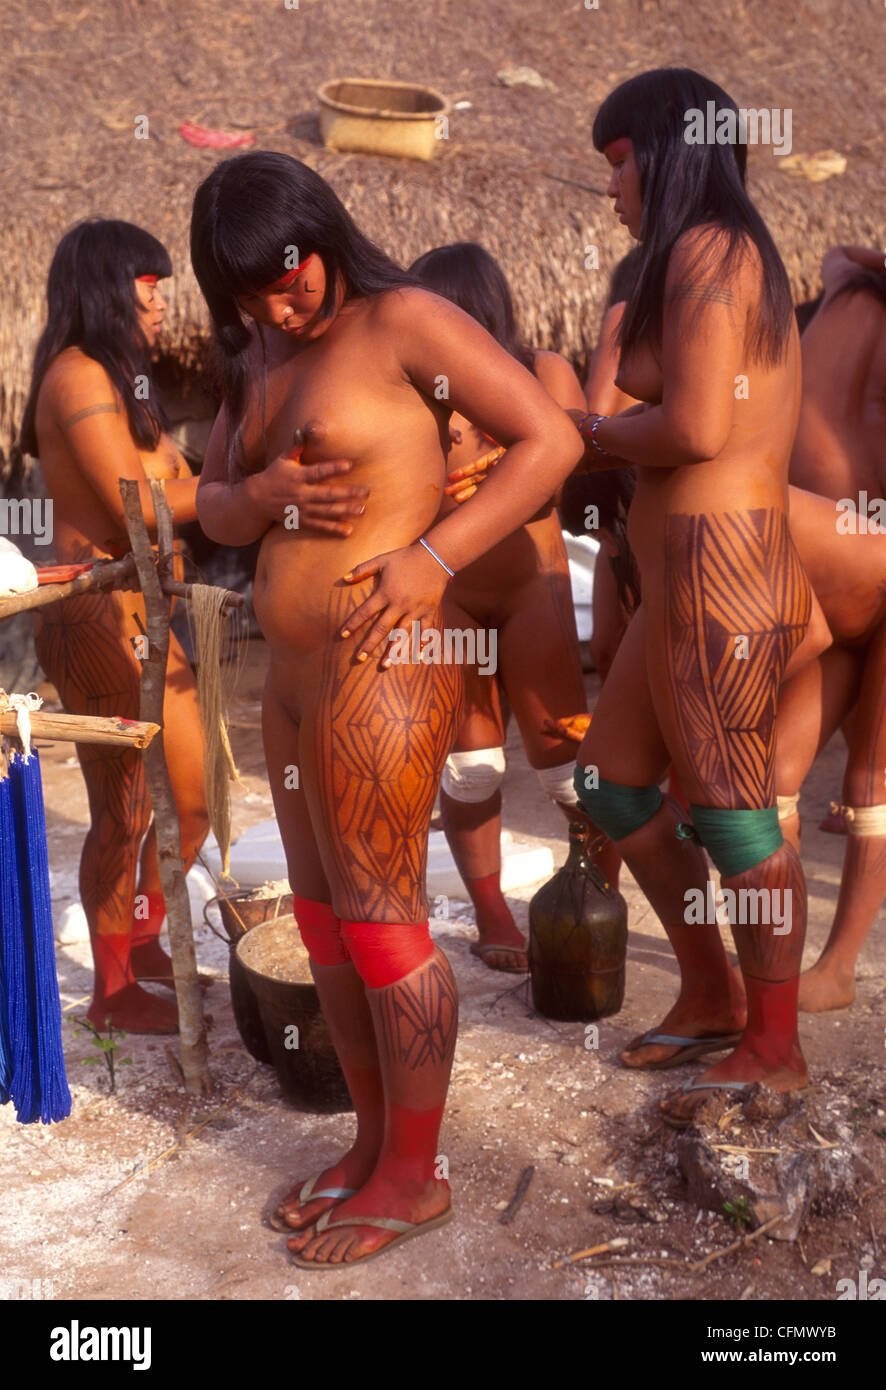 South American Tribes Porn - Amazon Tribes Women Erotica (61 photos) - porn photo